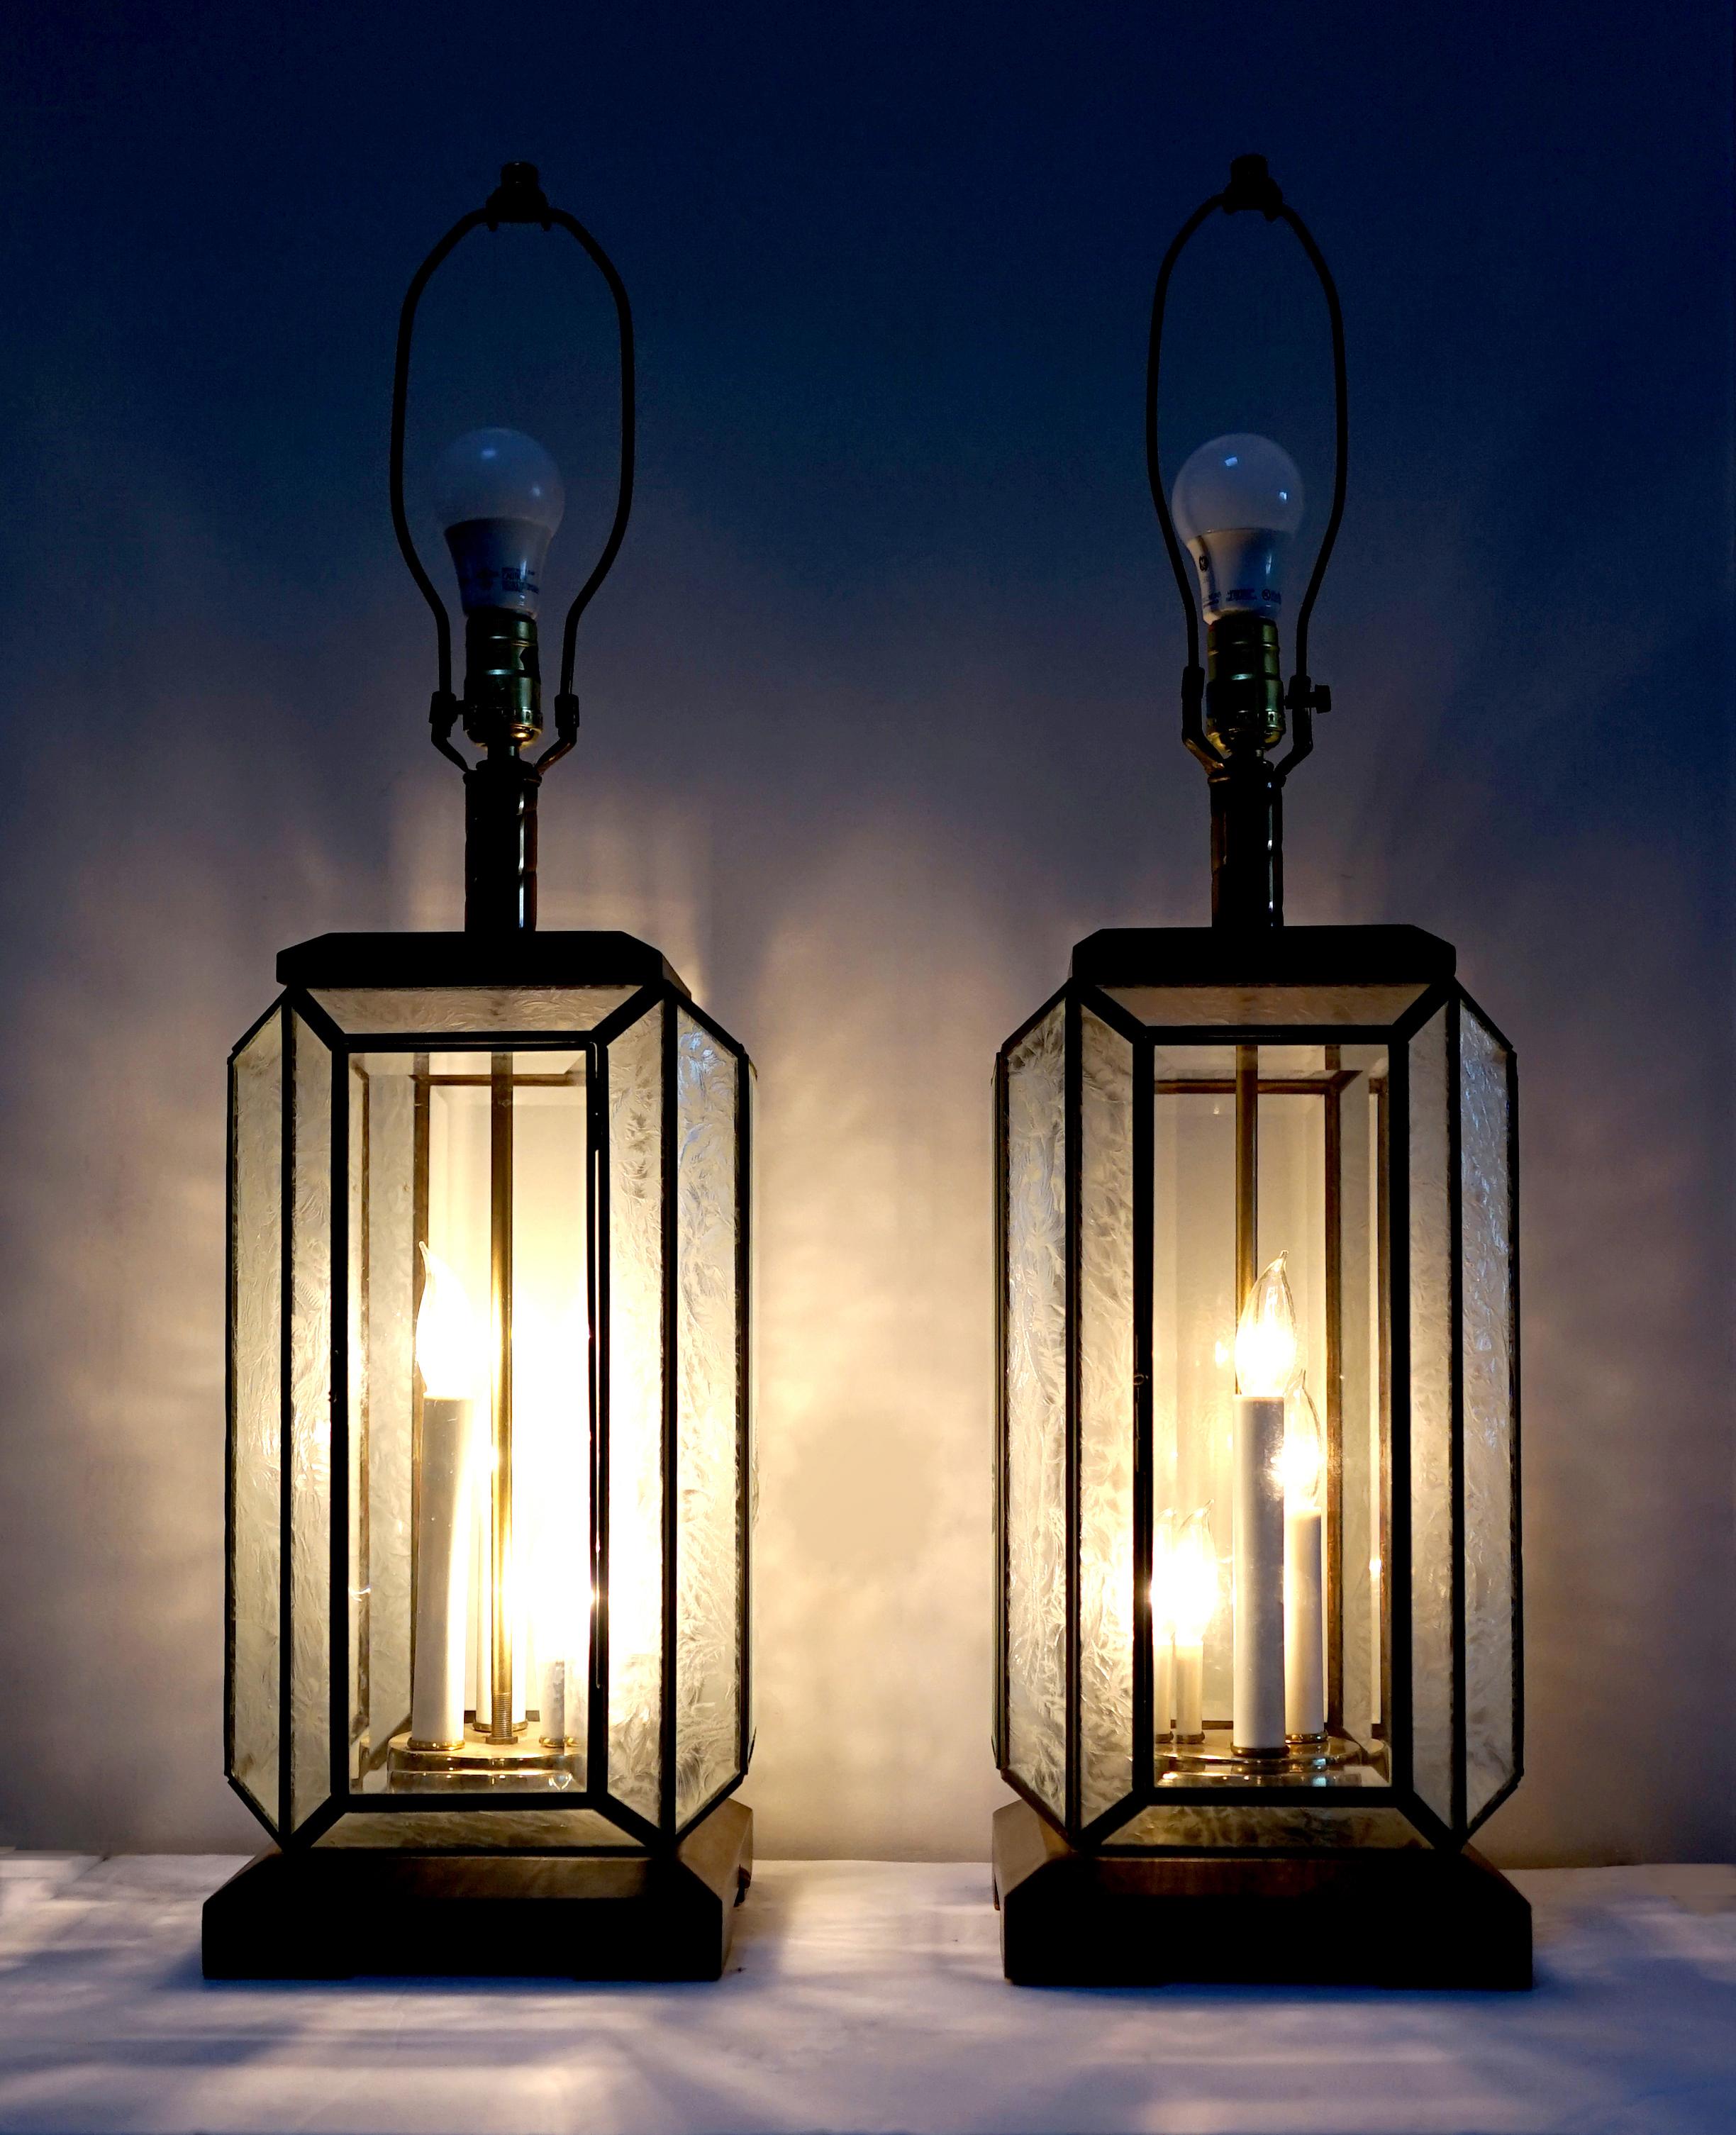 This pair of lamps creates an elegant 